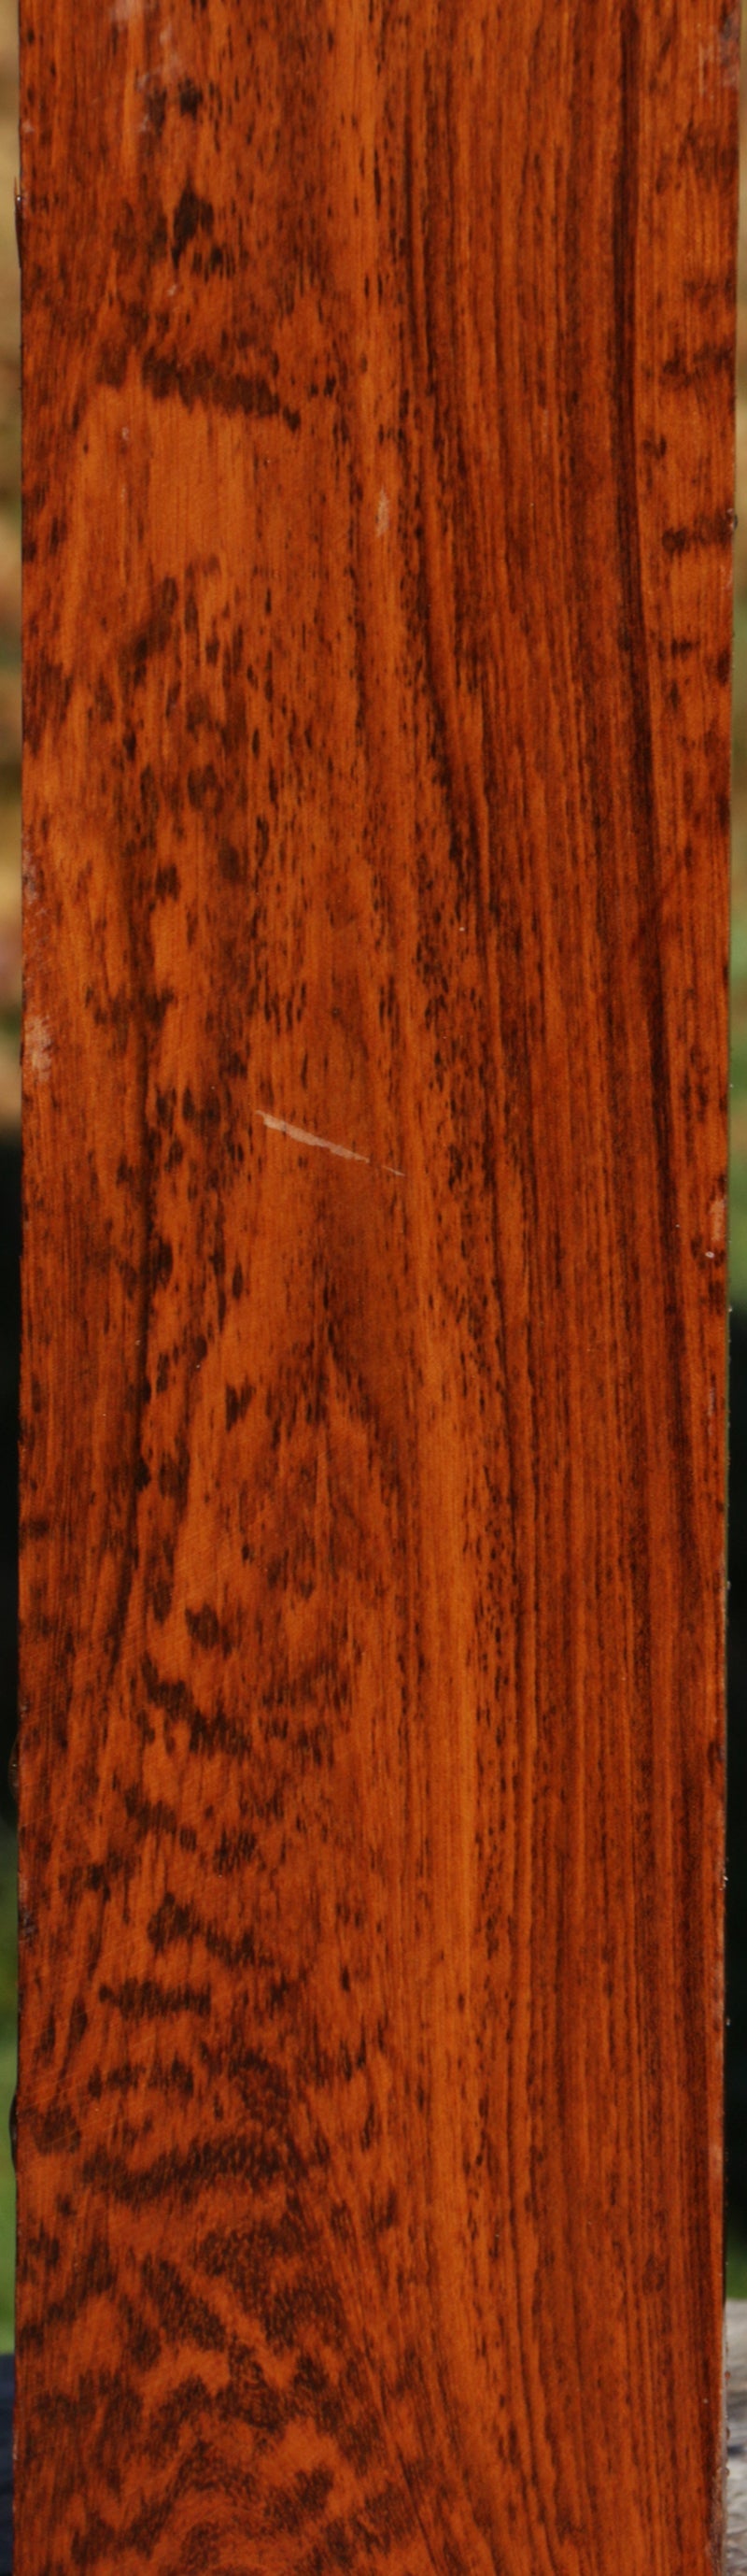 Snakewood Live Edge Lumber